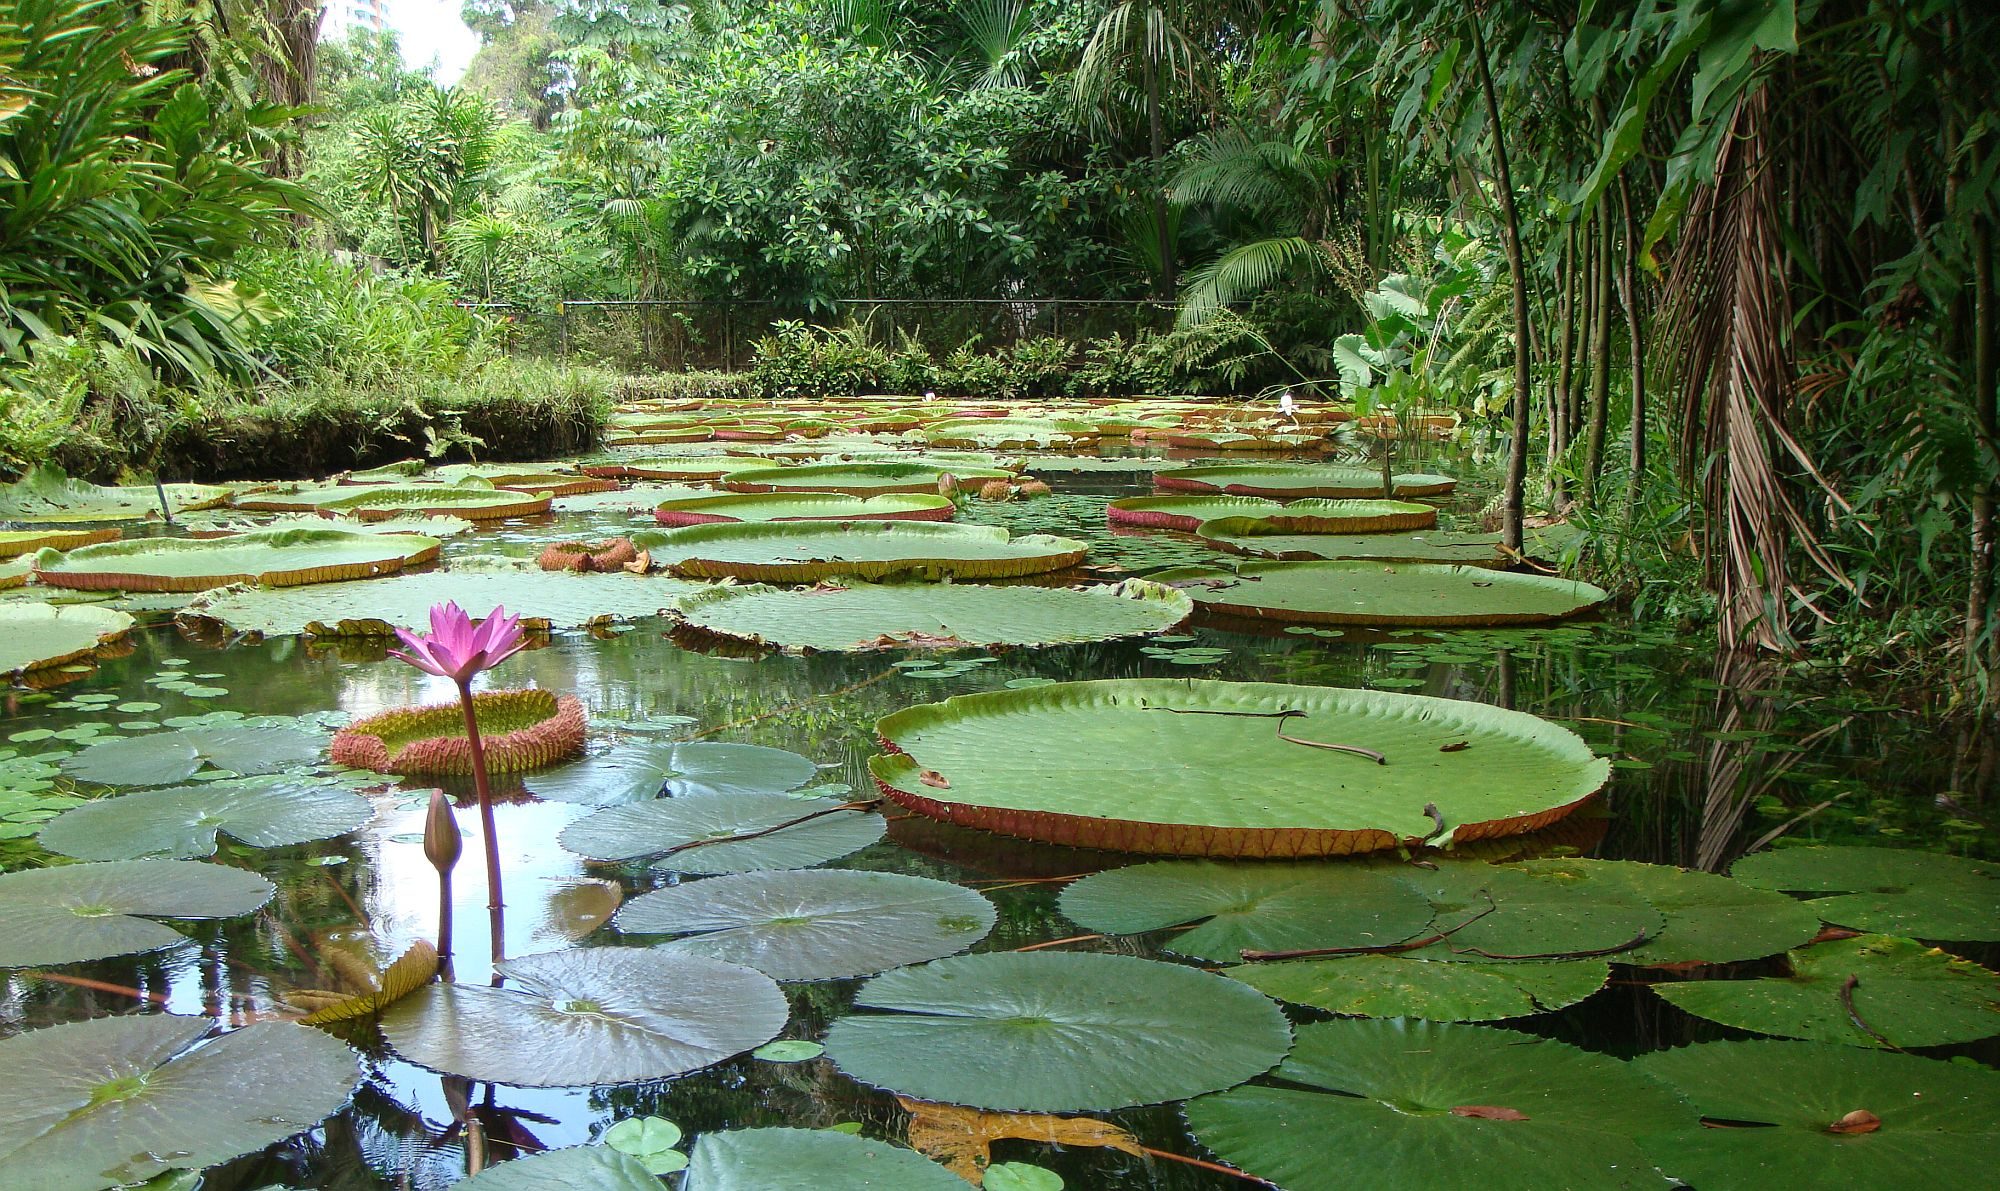 Victoria Regia and other Amazonian plants species